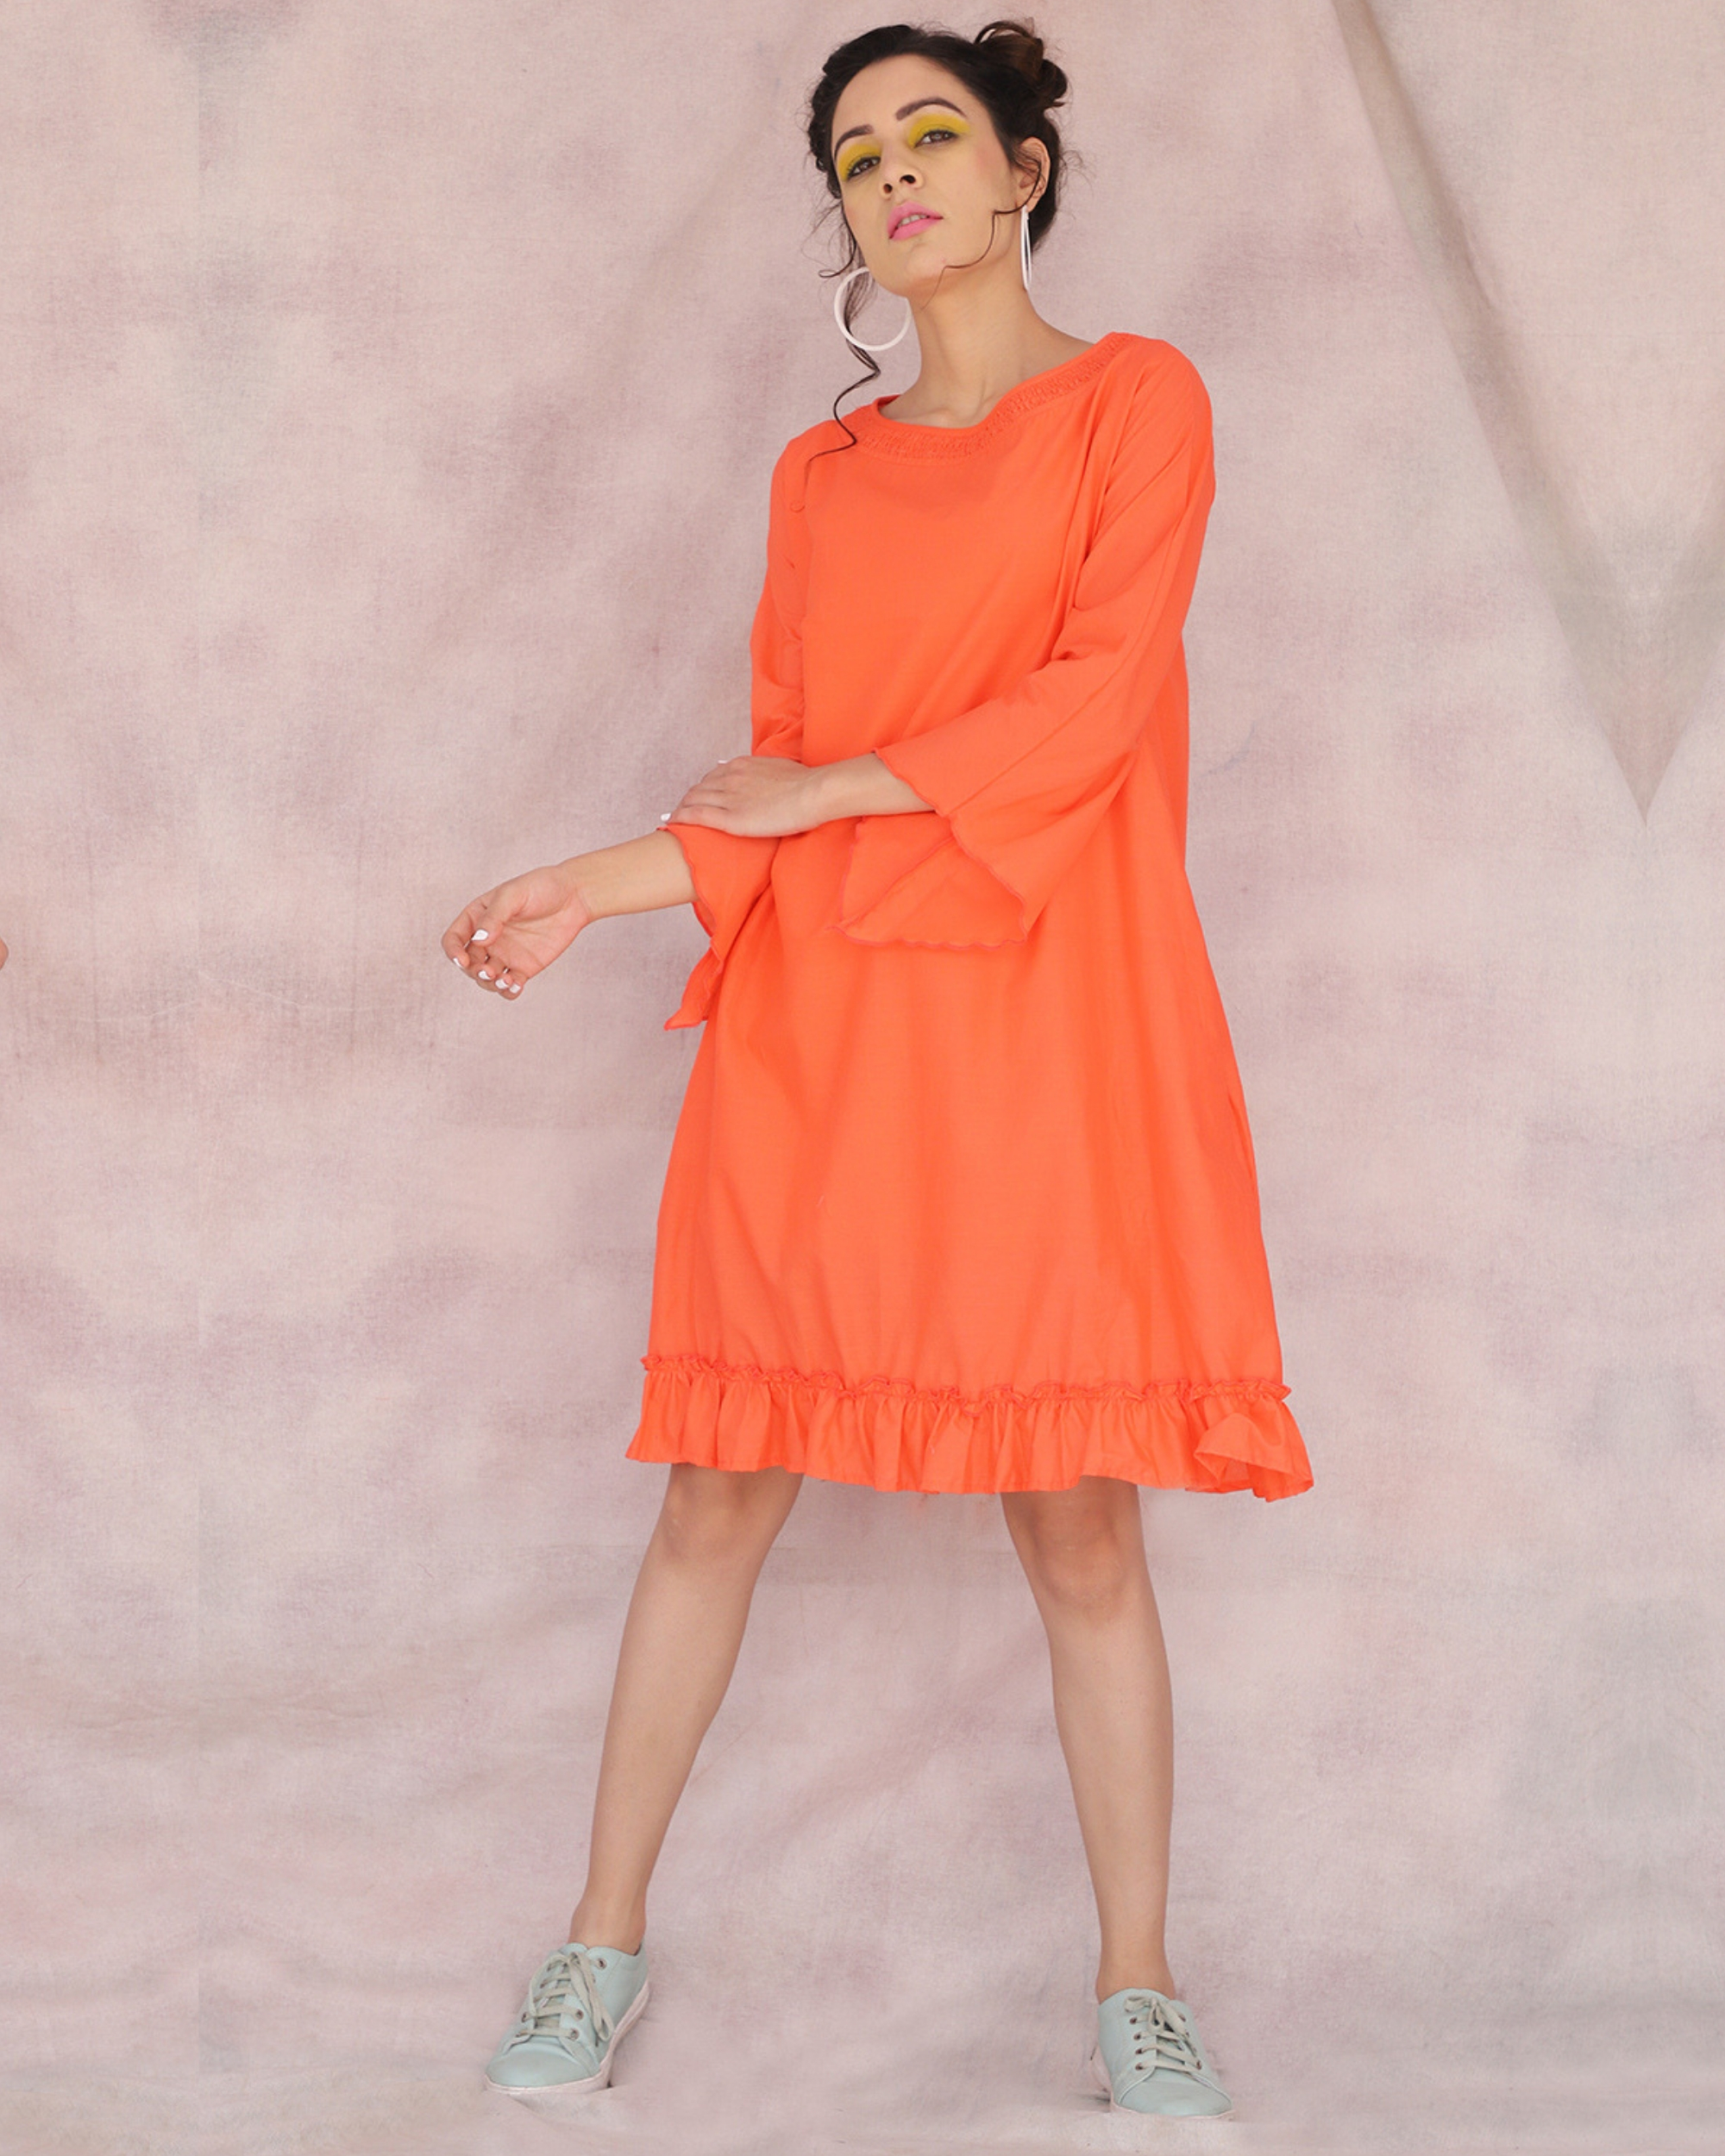 Orange ruffled dress by Red Cherry | The Secret Label